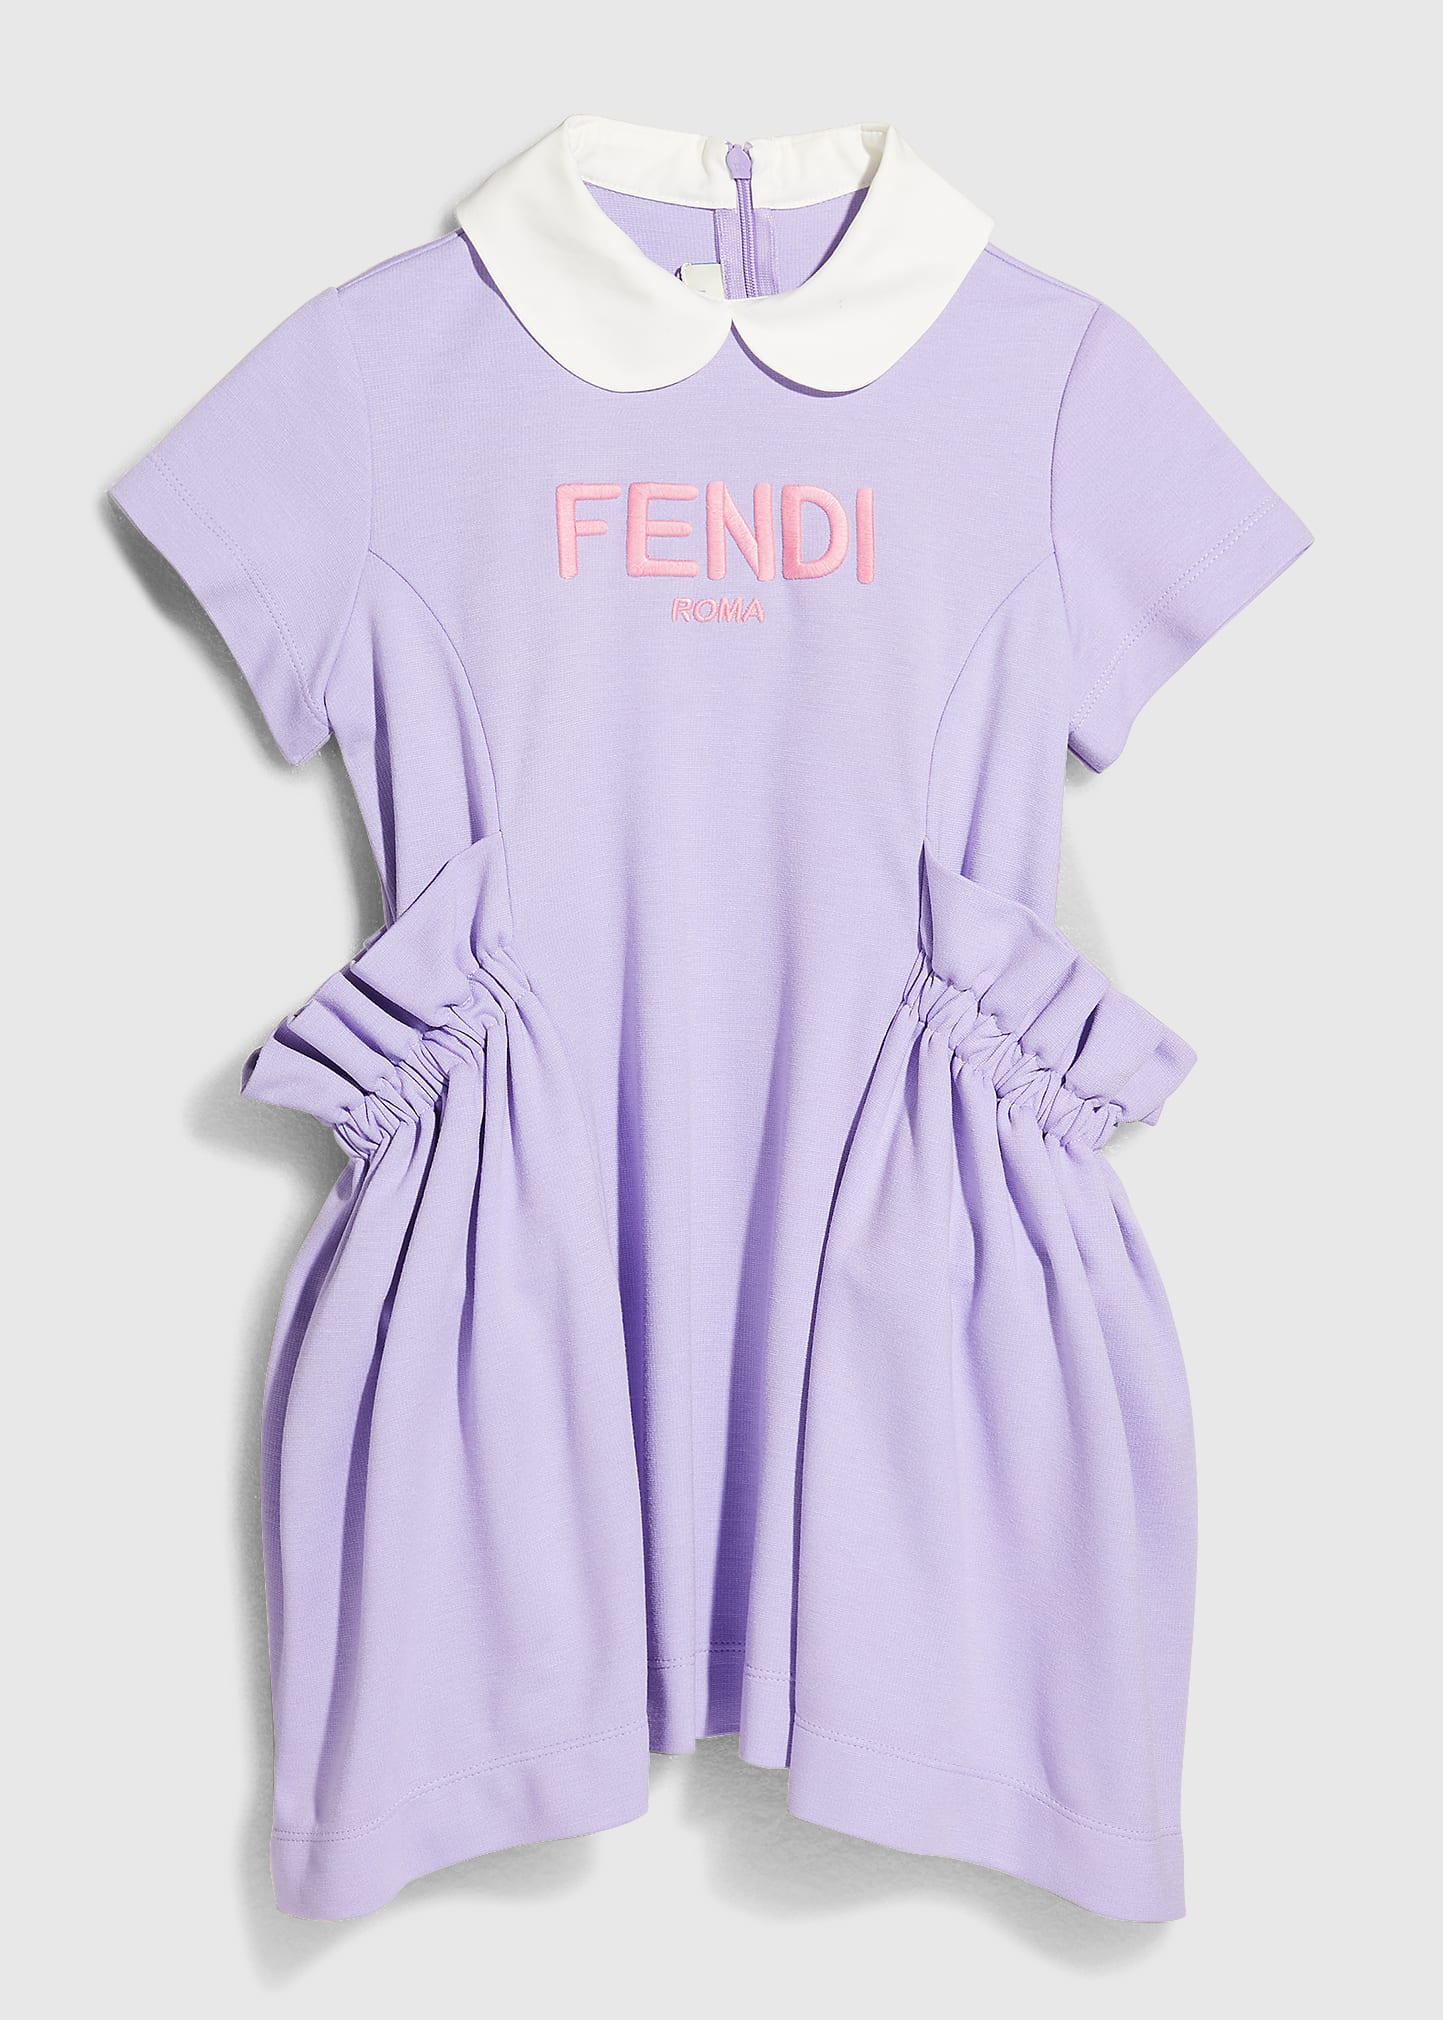 Fendi Dress | bergdorfgoodman.com